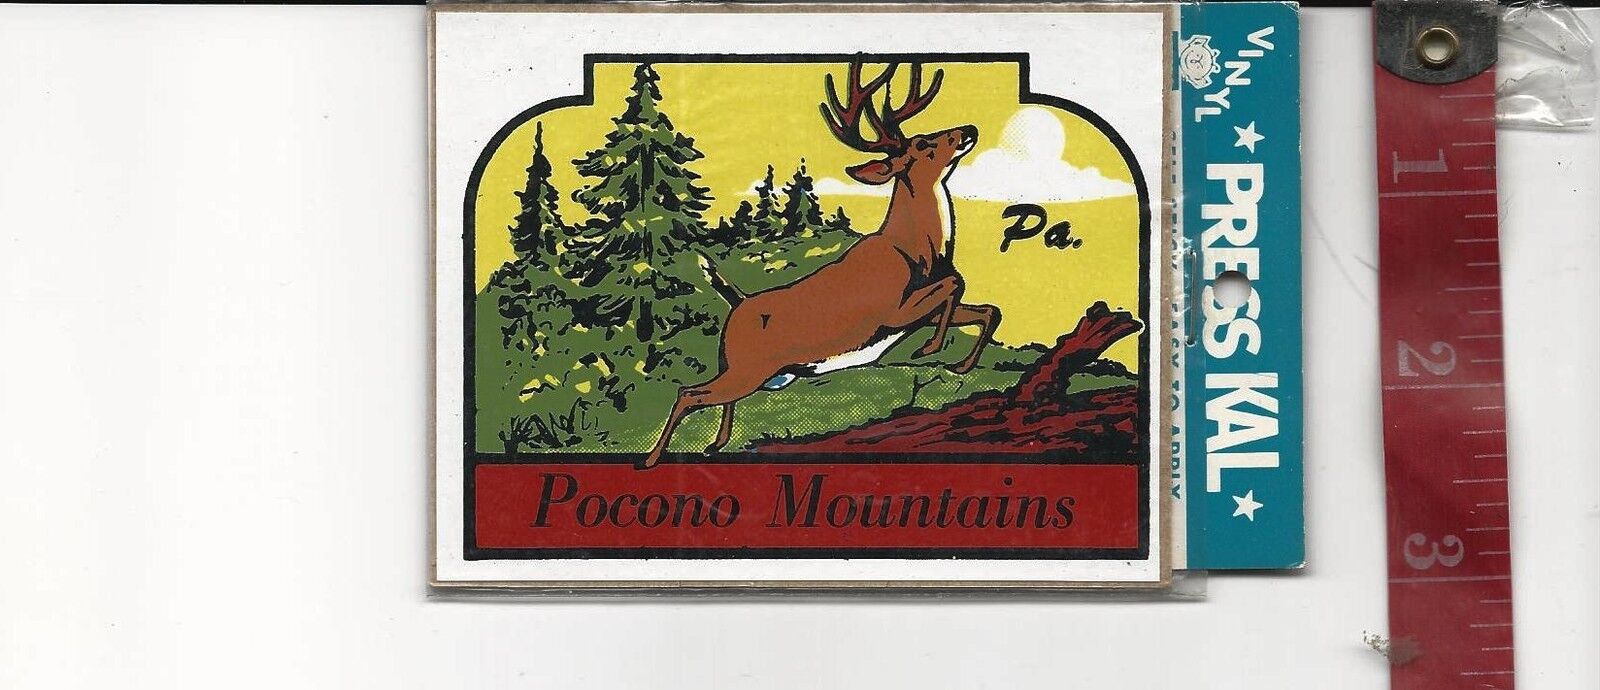 Vintage Impko Vinyl Press KAL Pocono Mountains Pa. sticker original packaging